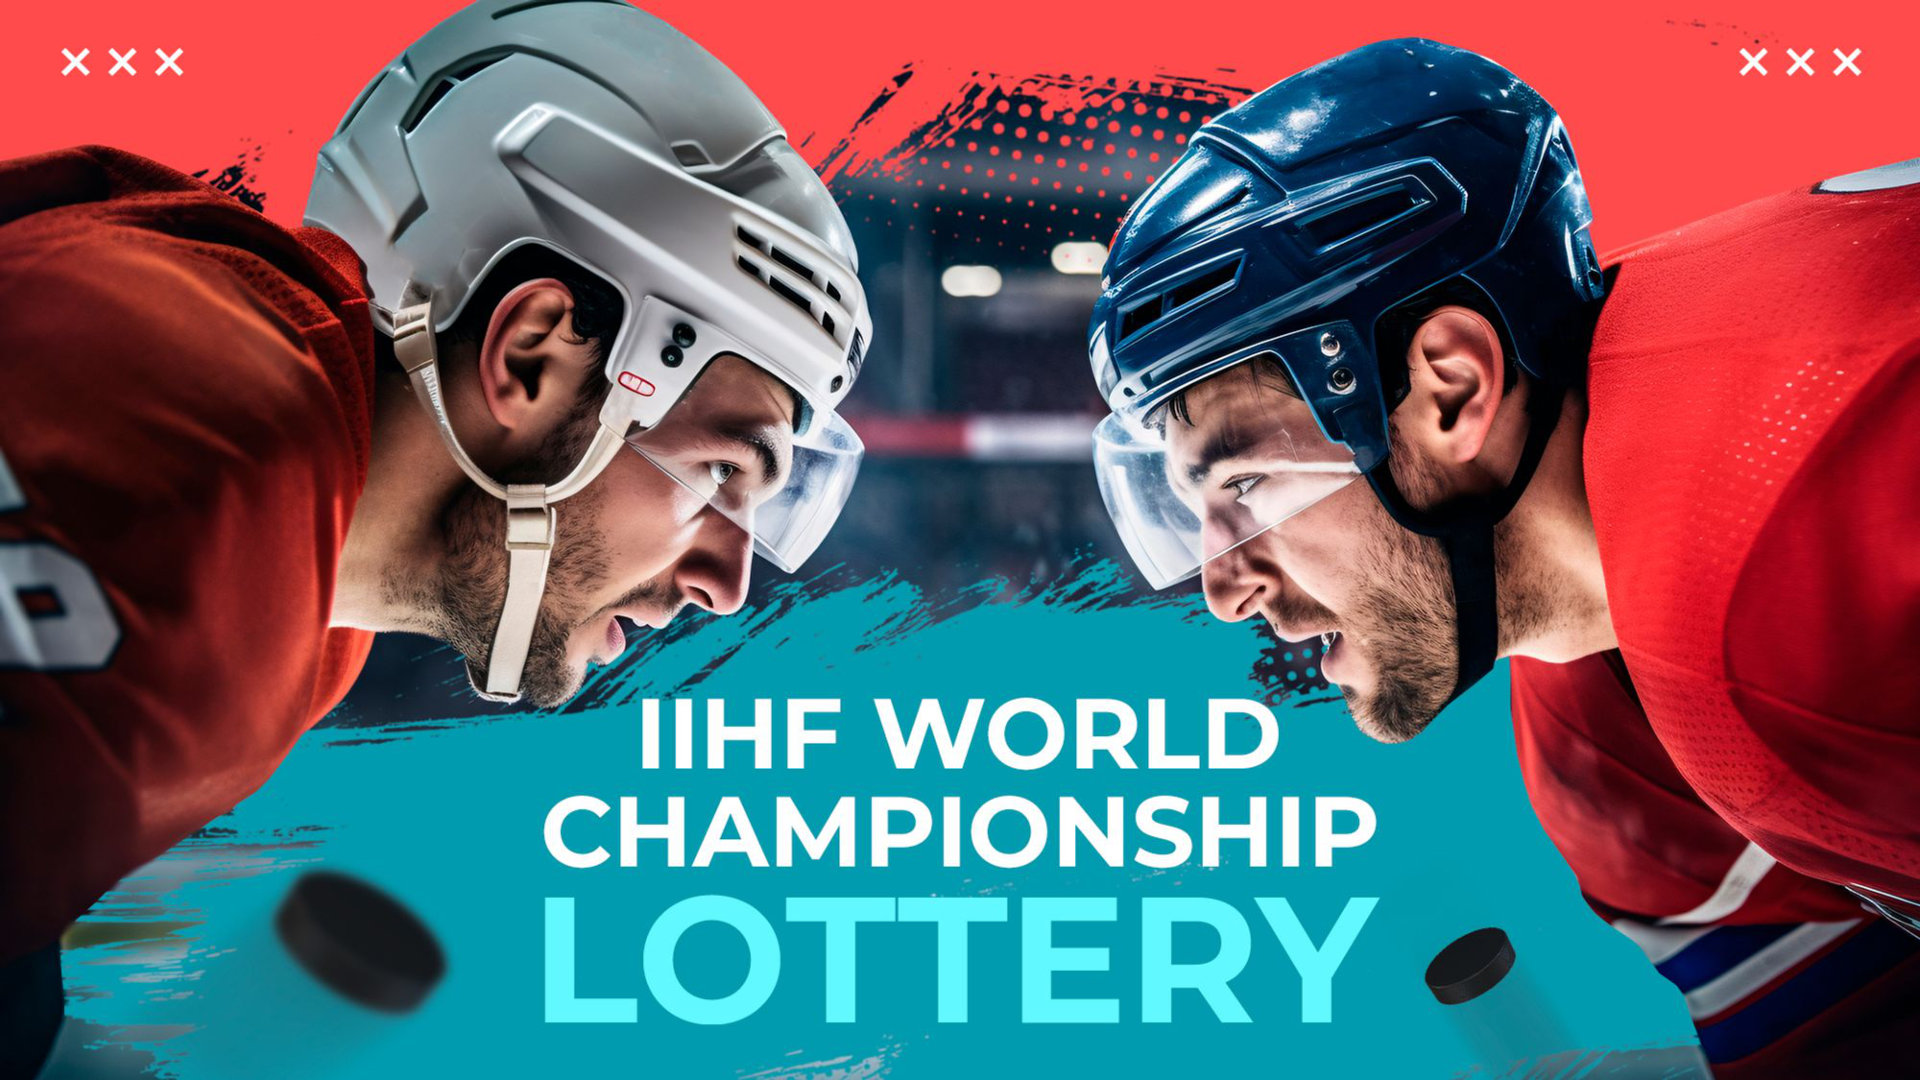 IIHF World Championship Lottery from 22Bet